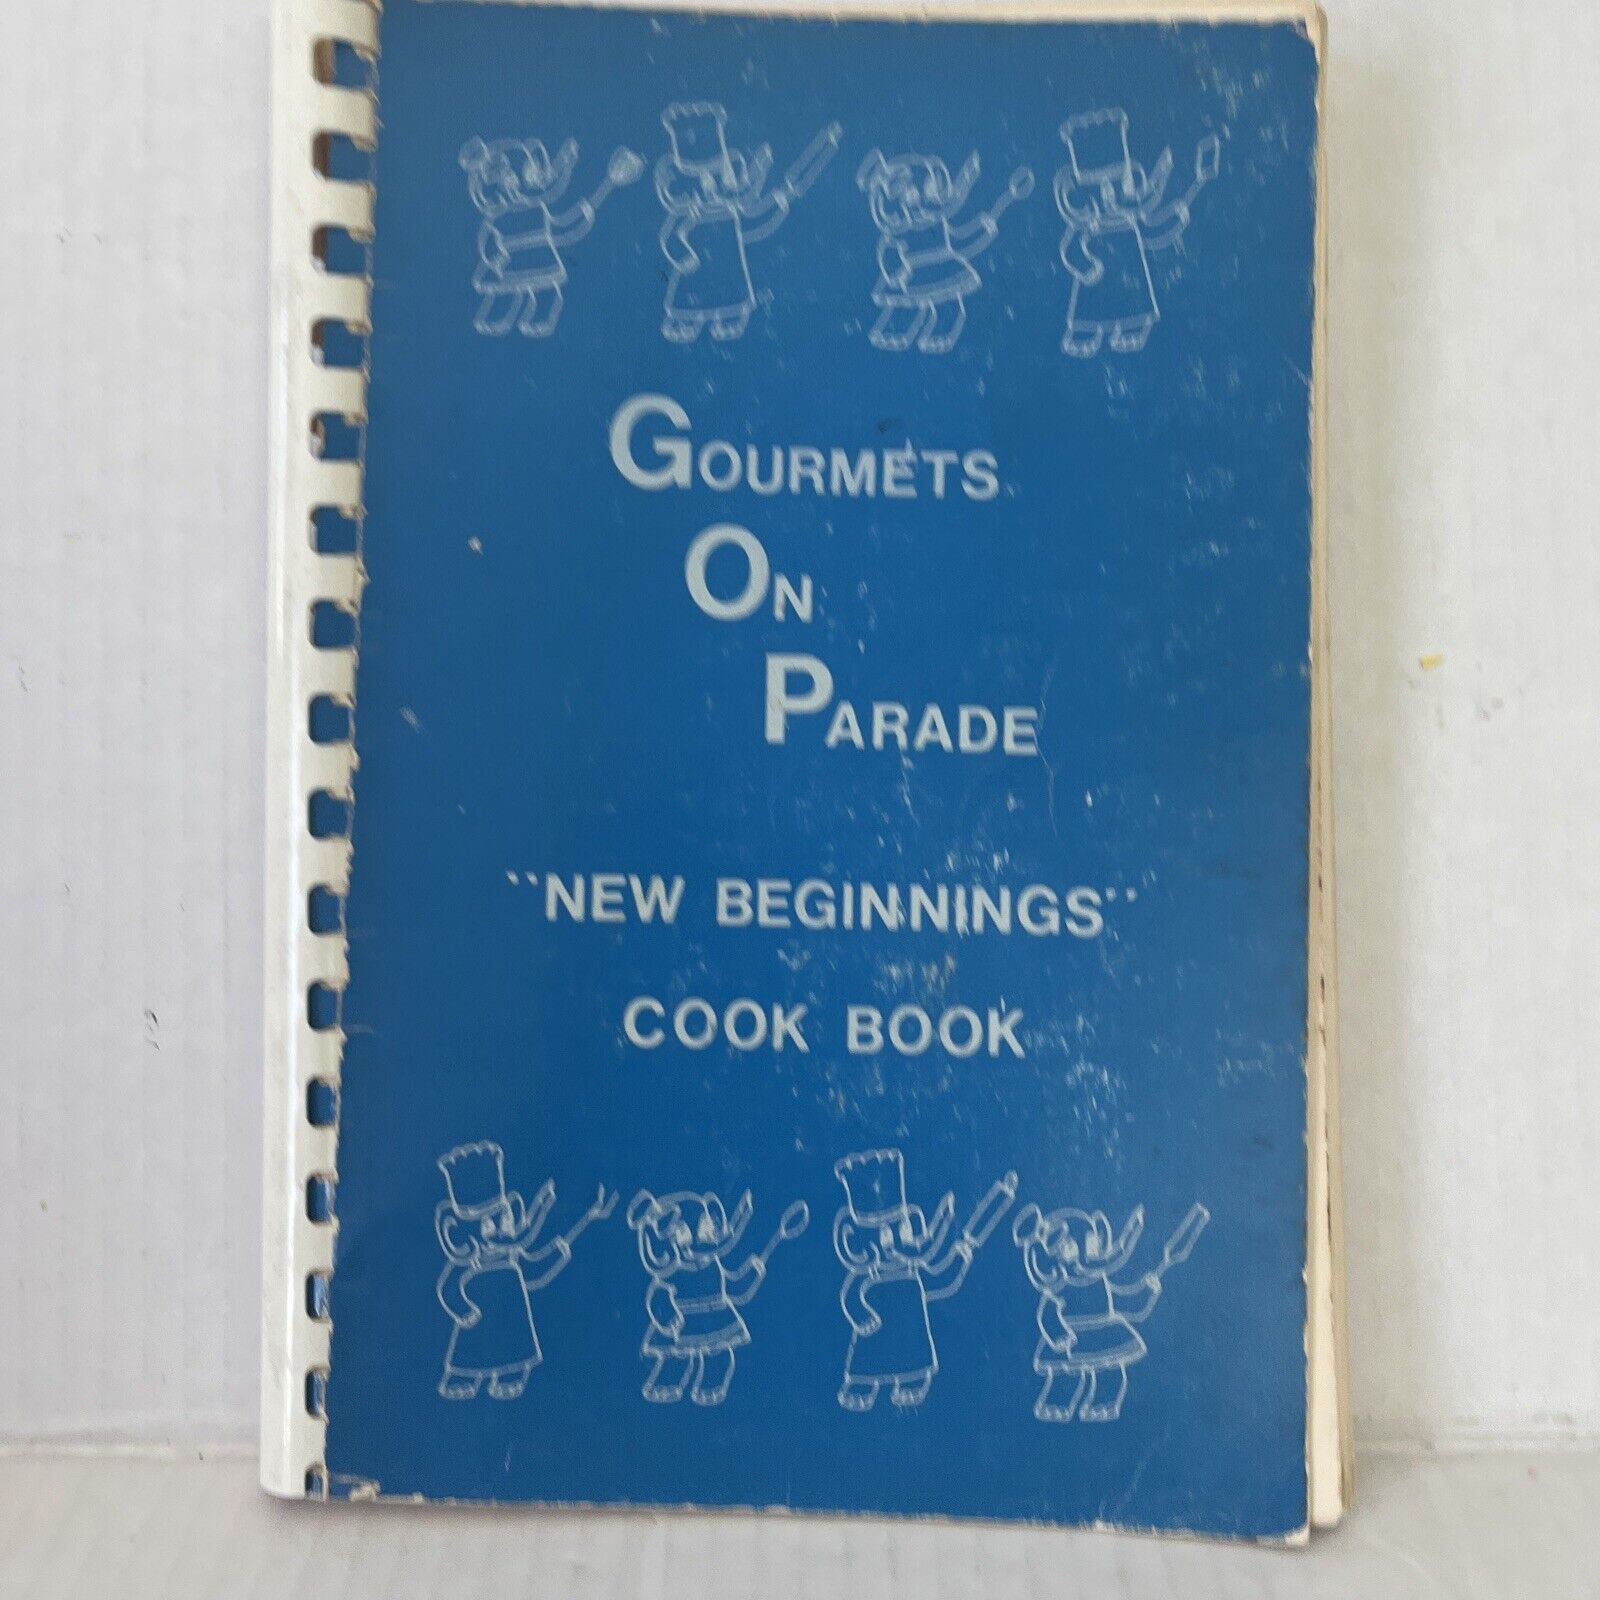 Vintage 1981 Snohomish County Republican Woman Club Cookbook in Washington